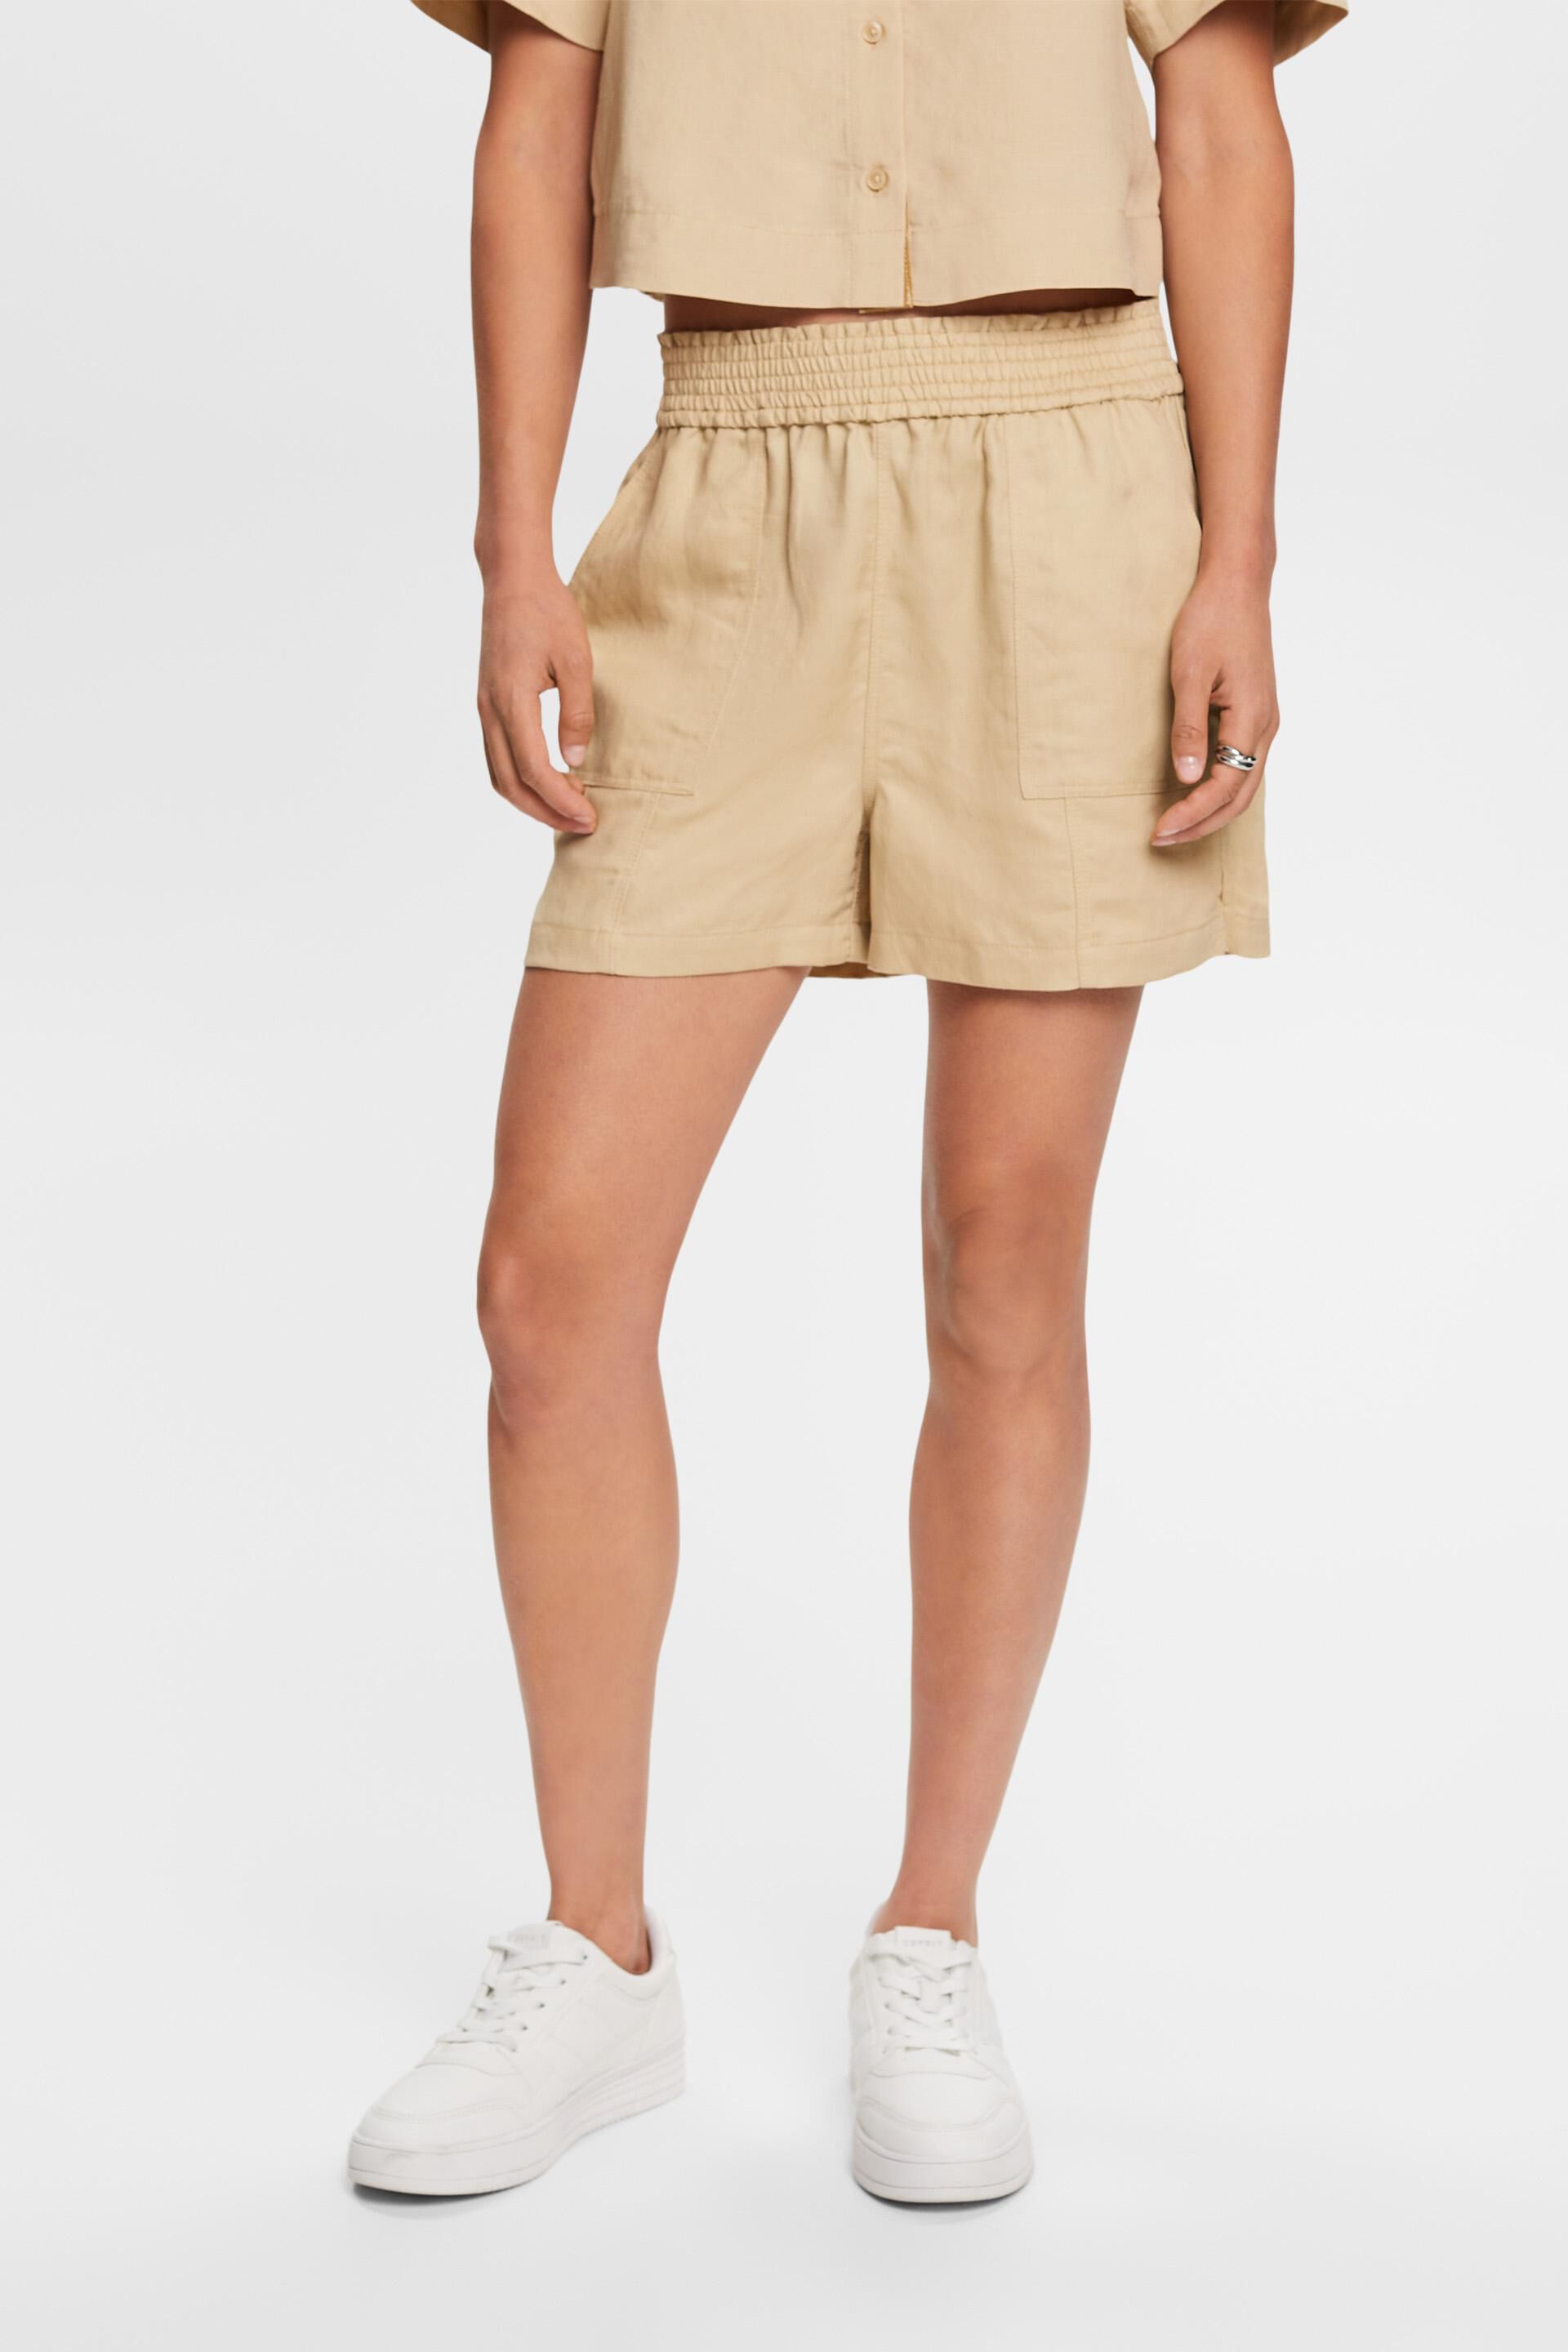 Esprit shorts, linen blend Pull-on